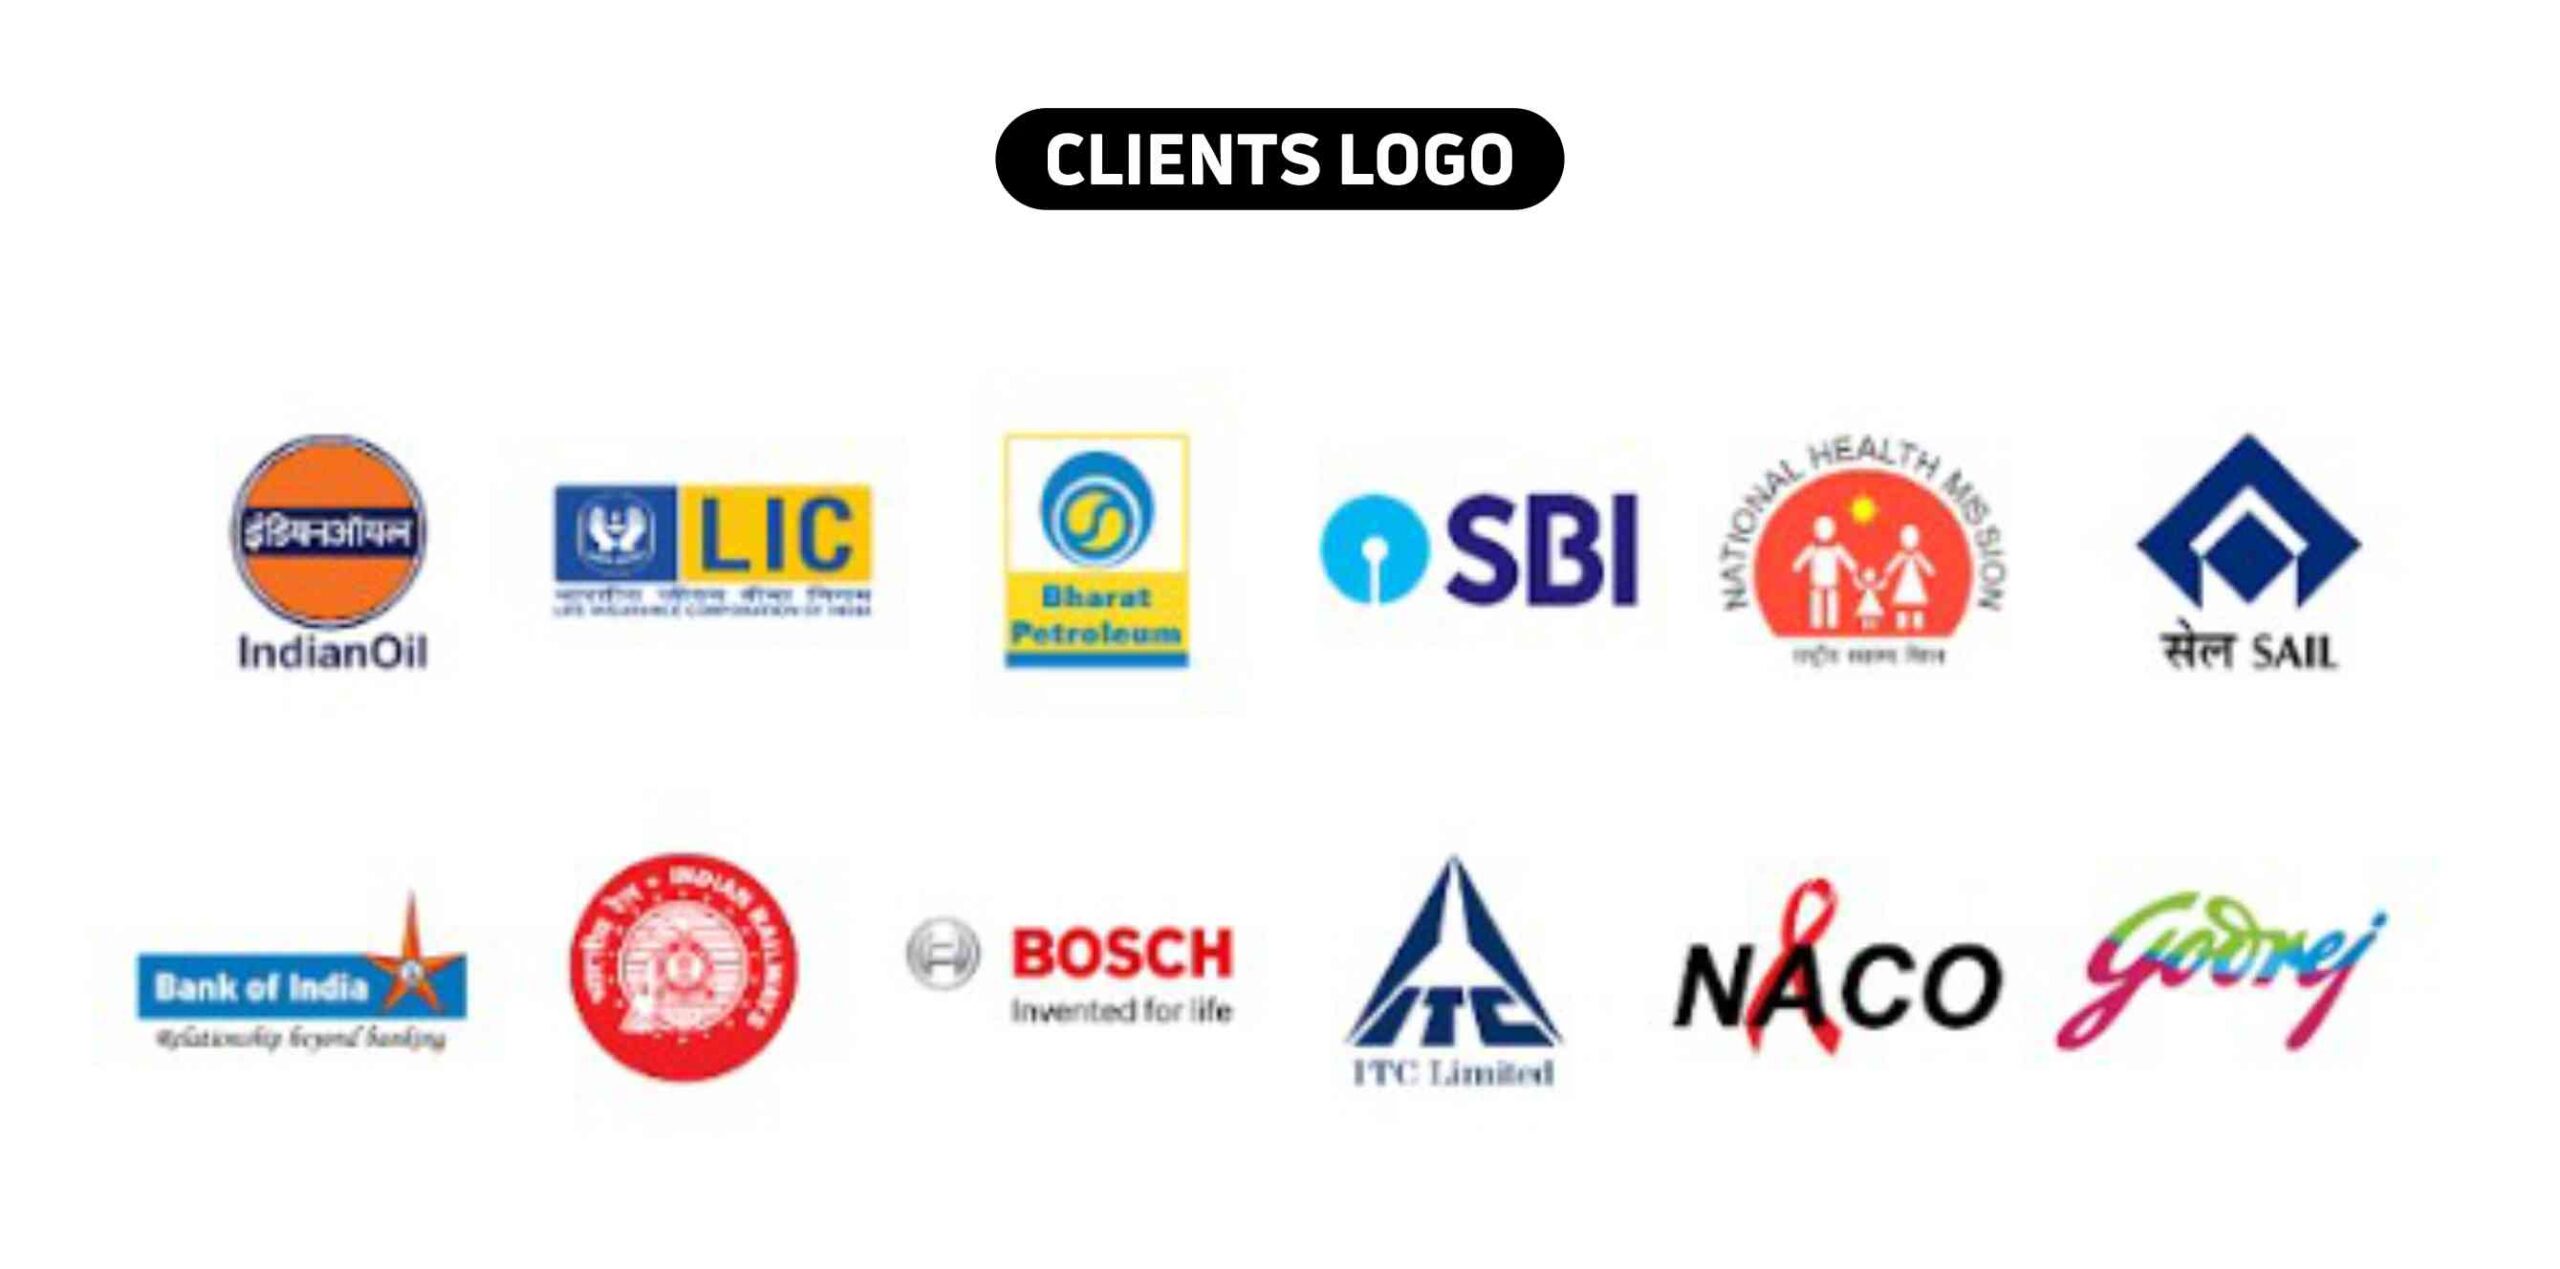 Redolenz Advertising Guwahati Clients Logo